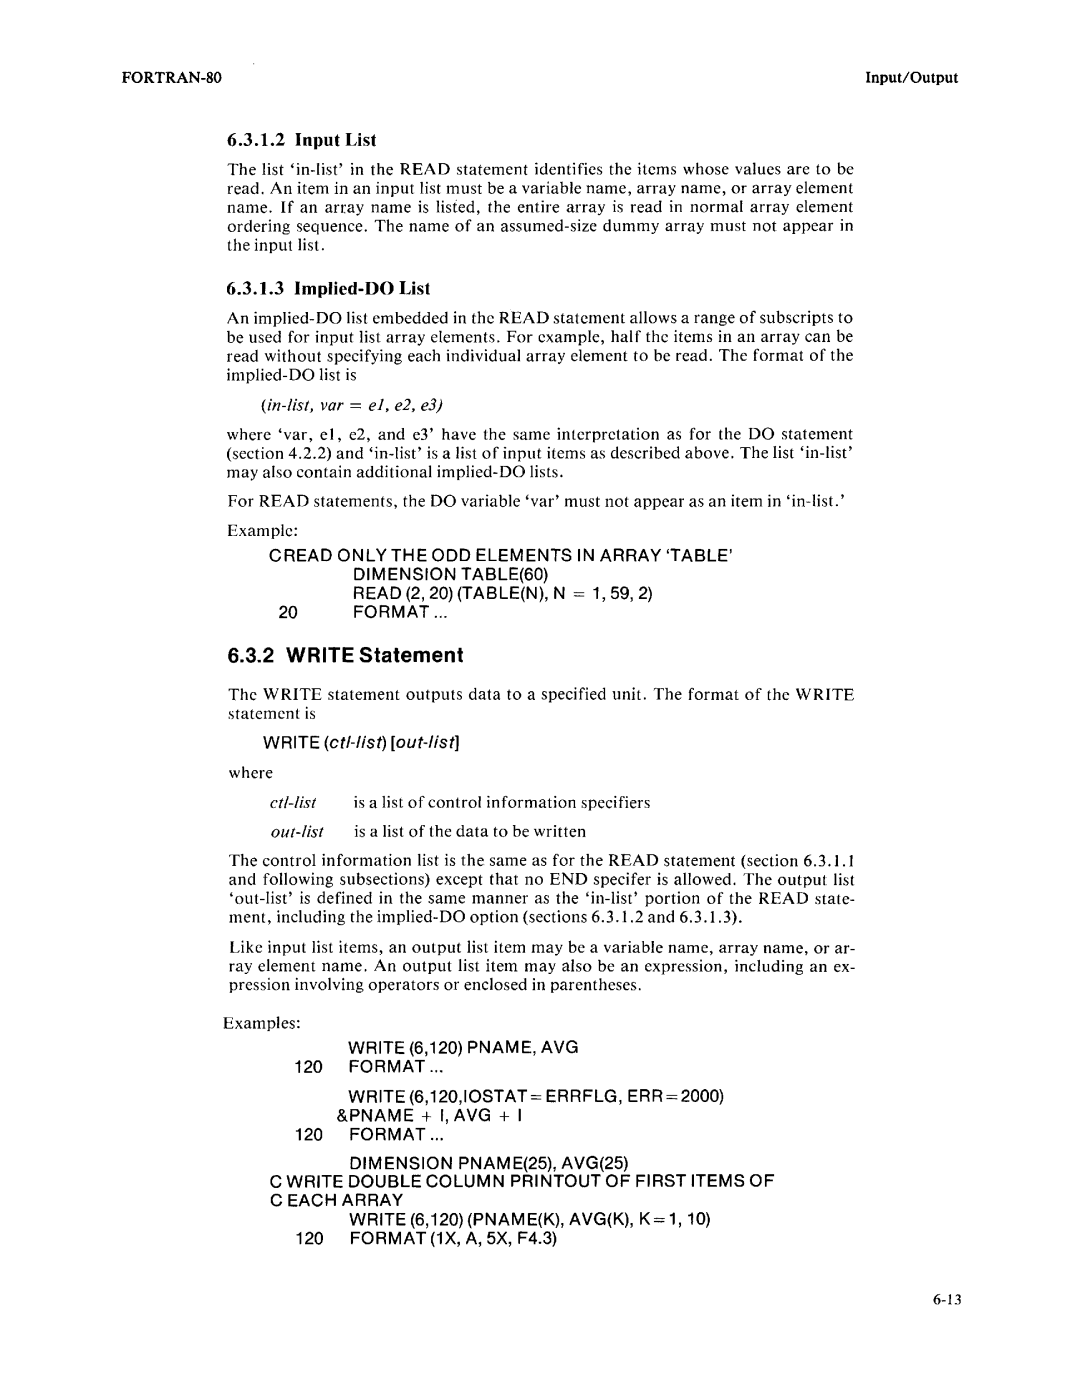 Intel fortran-80 manual 6.3.2WRITE Statement, Input List, Implied-DOList, WRITE ctl-list out-list 